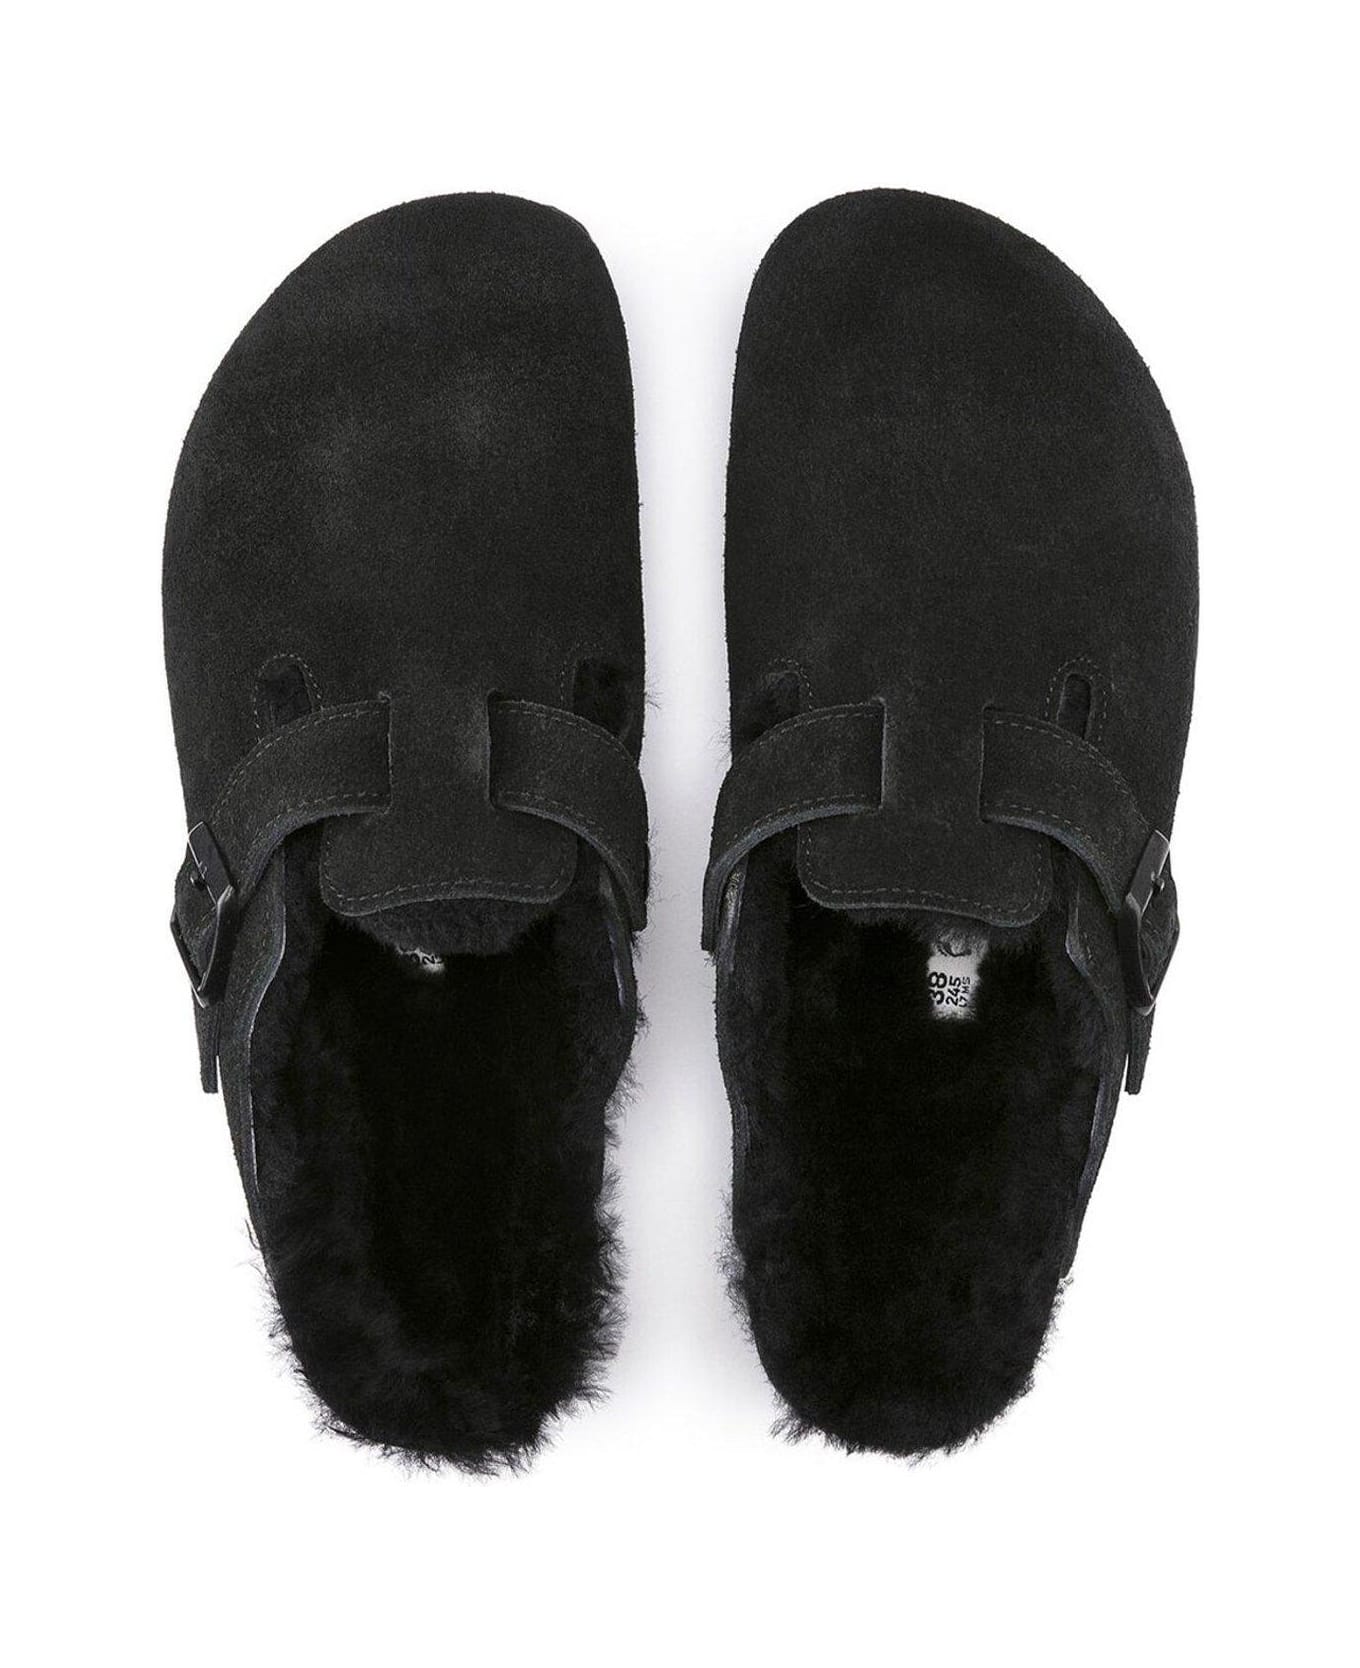 Birkenstock Boston Slip-on Sandals - Black Black サンダル